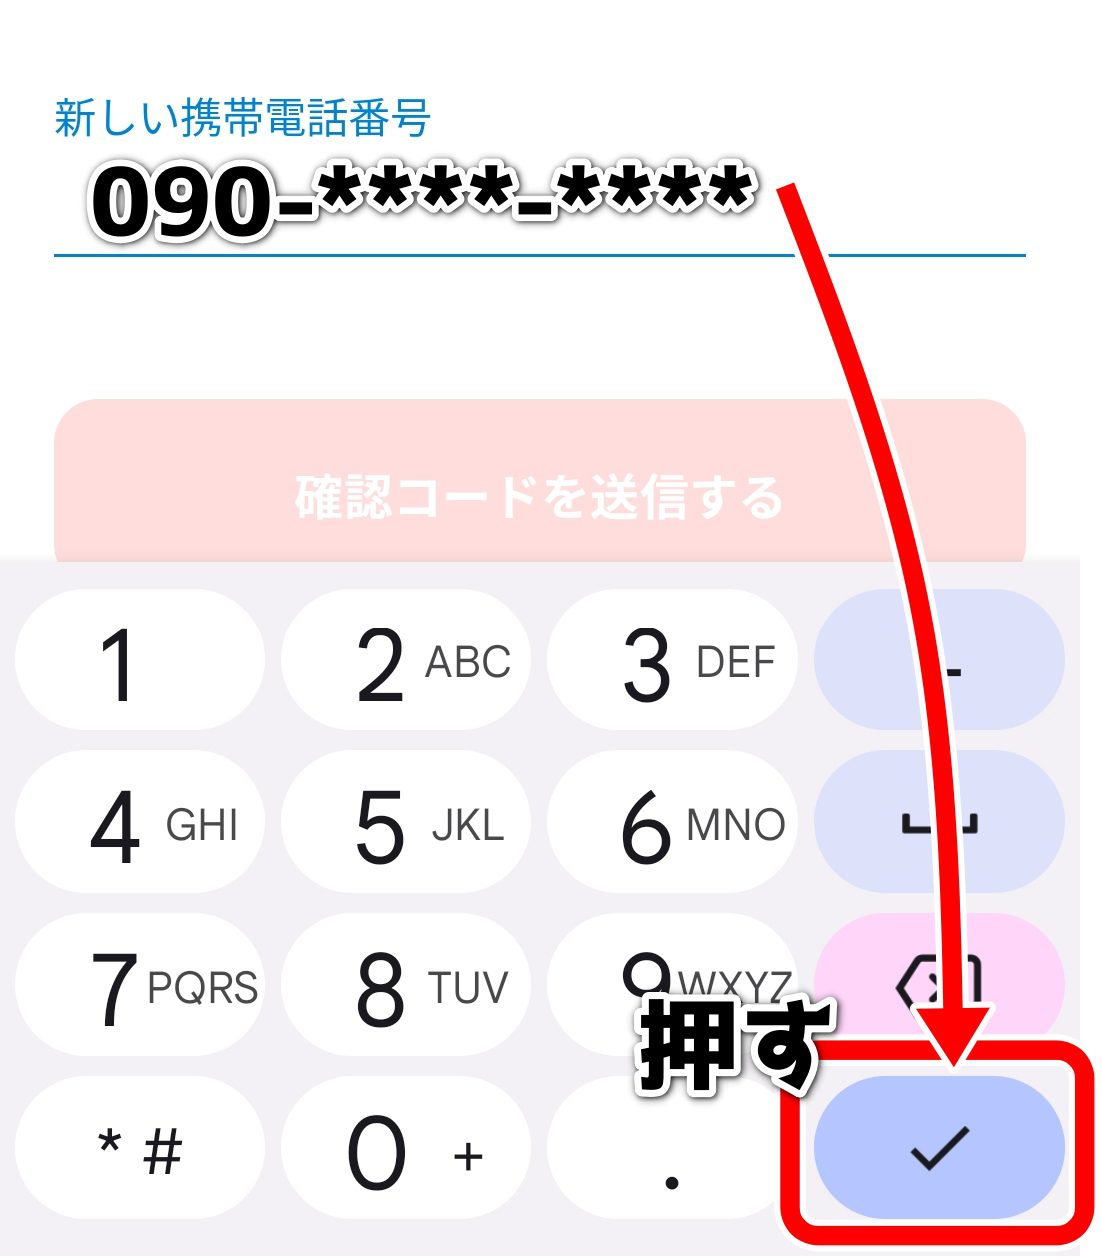 majicaアプリ 電話番号認証 できない